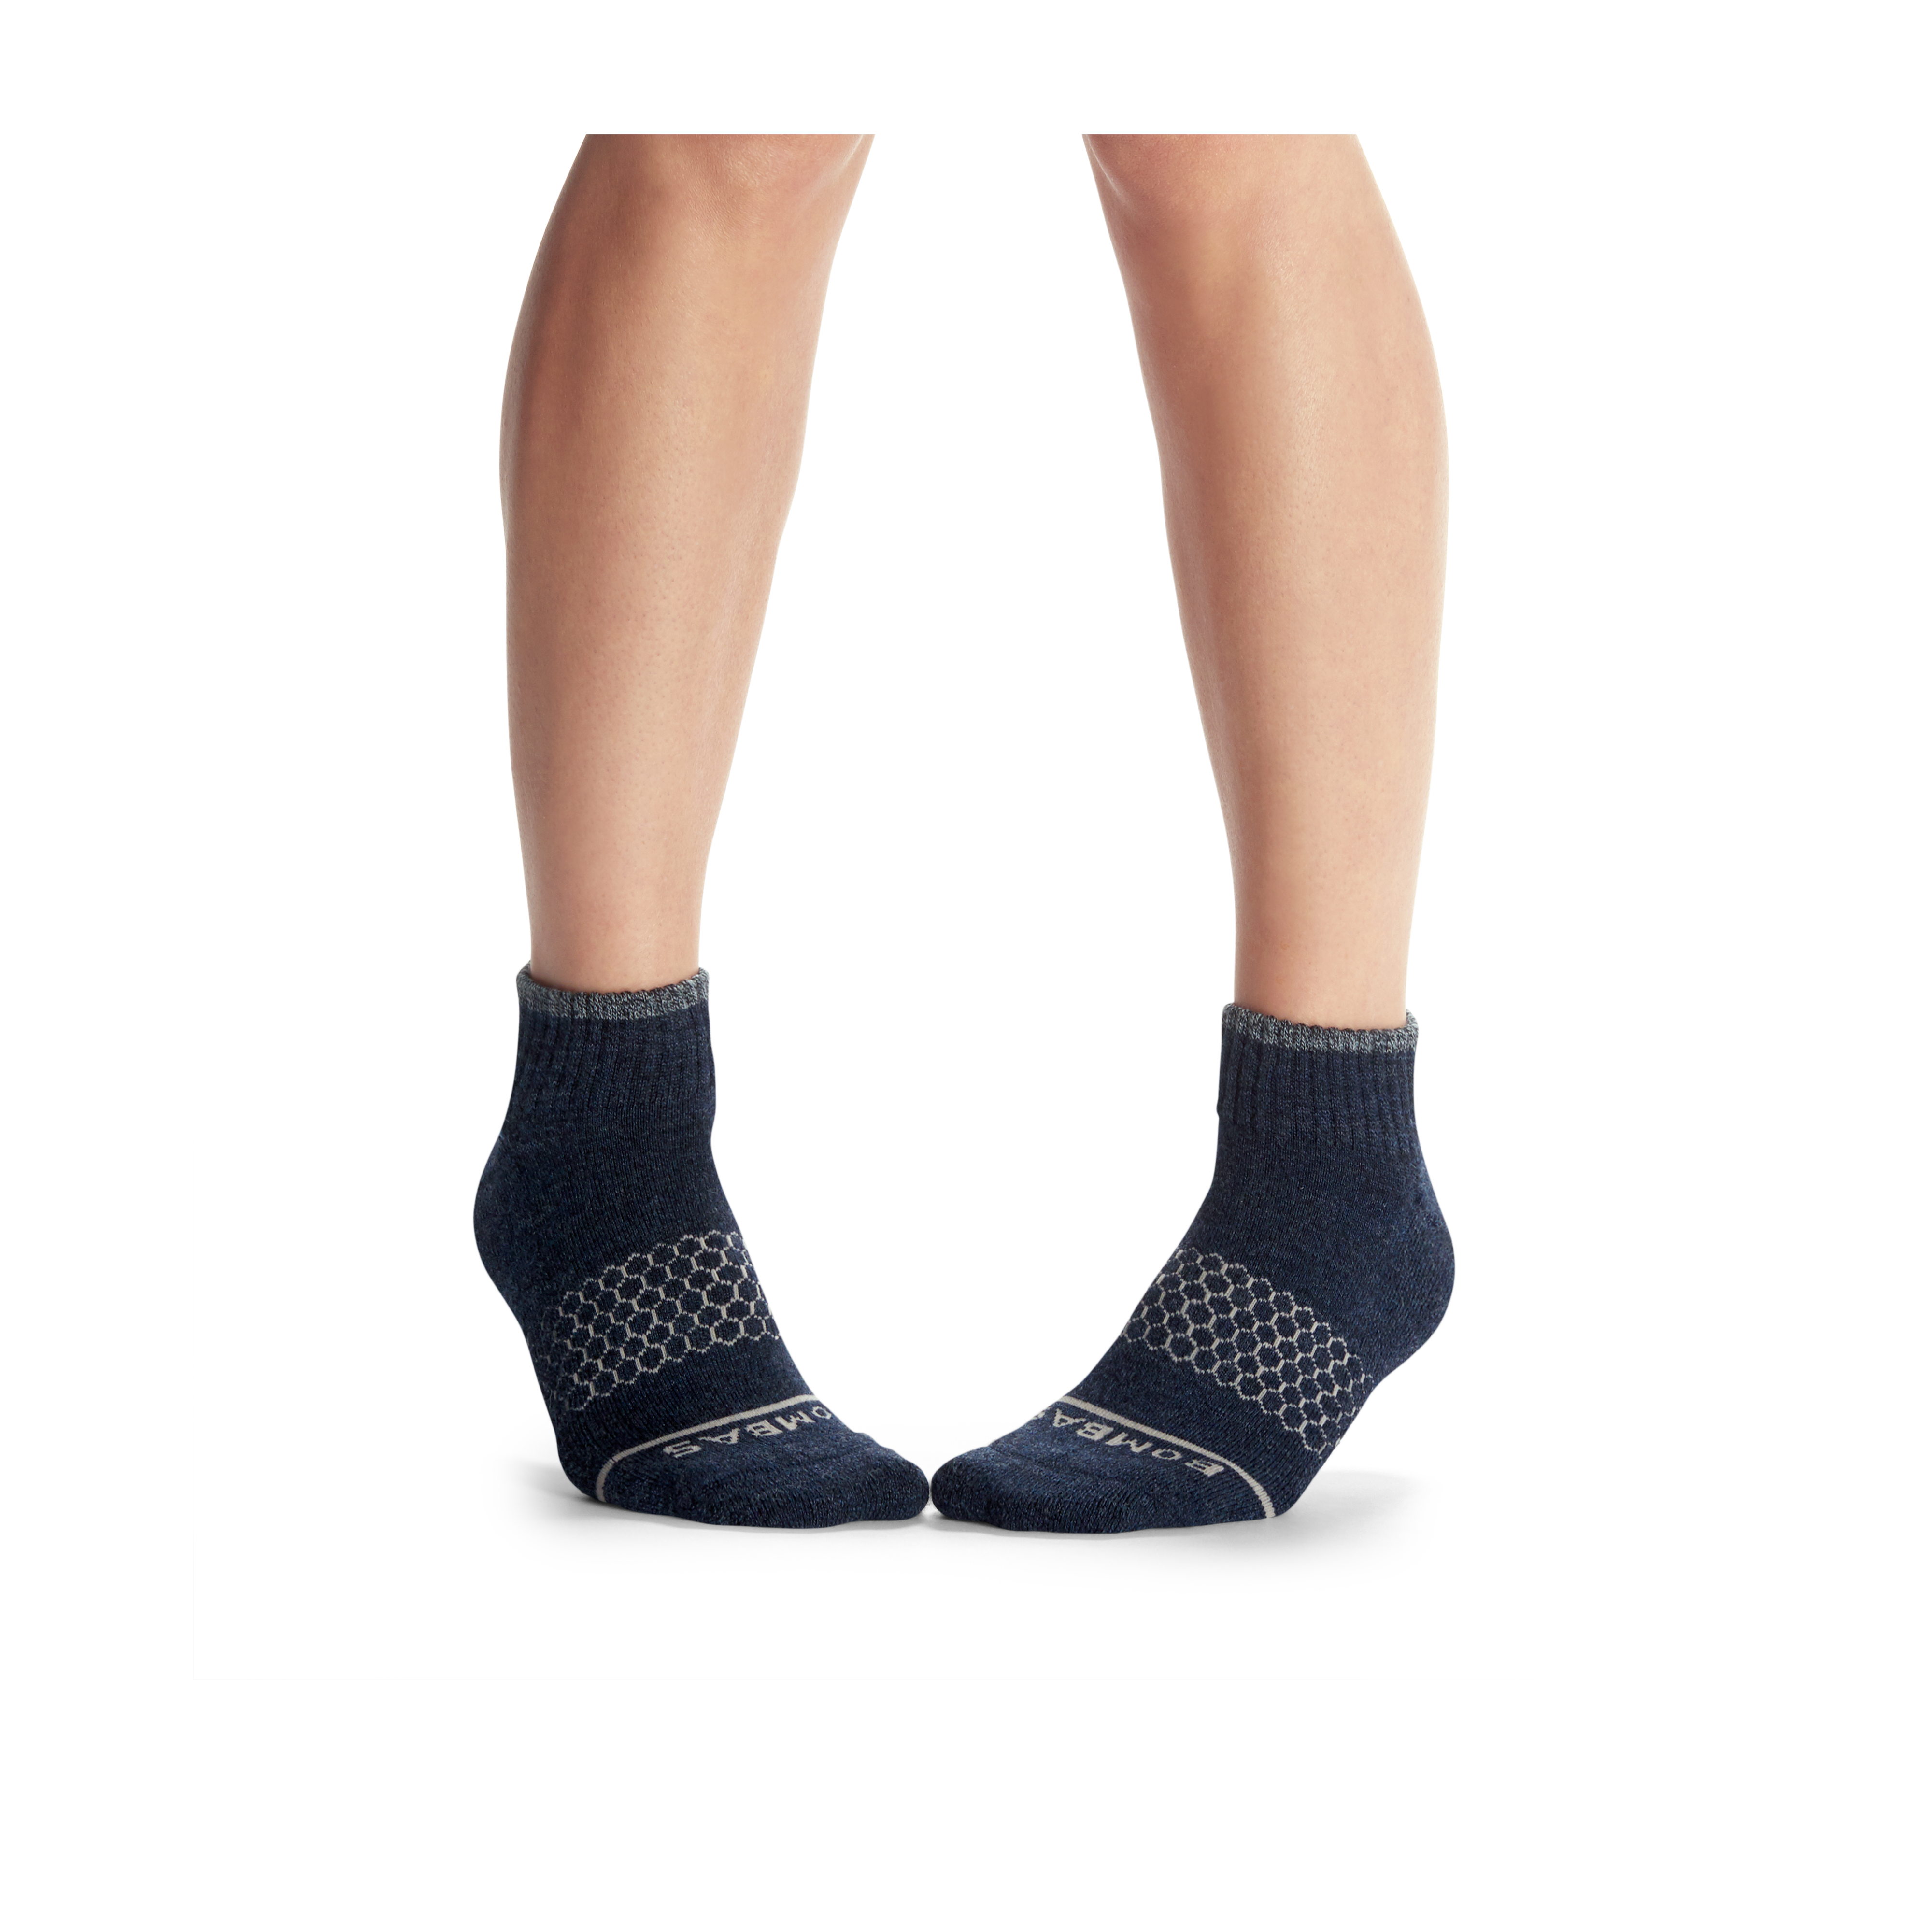 NNormal Merino socks N2AMS01-003 Chaussettes Femme. Magasin